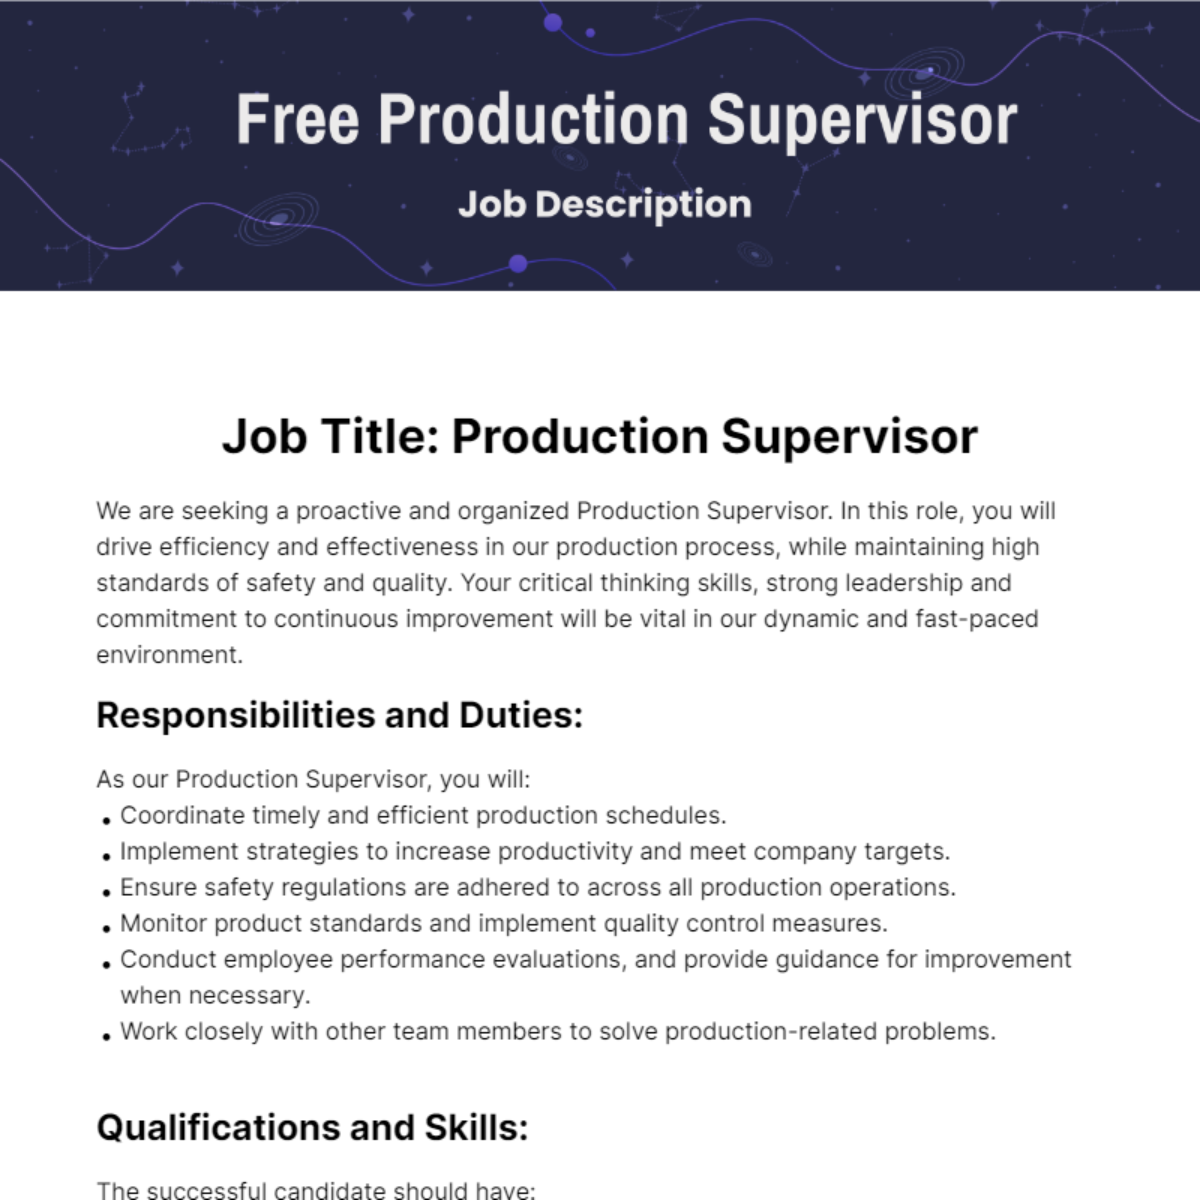 Free Production Supervisor Job Description Template